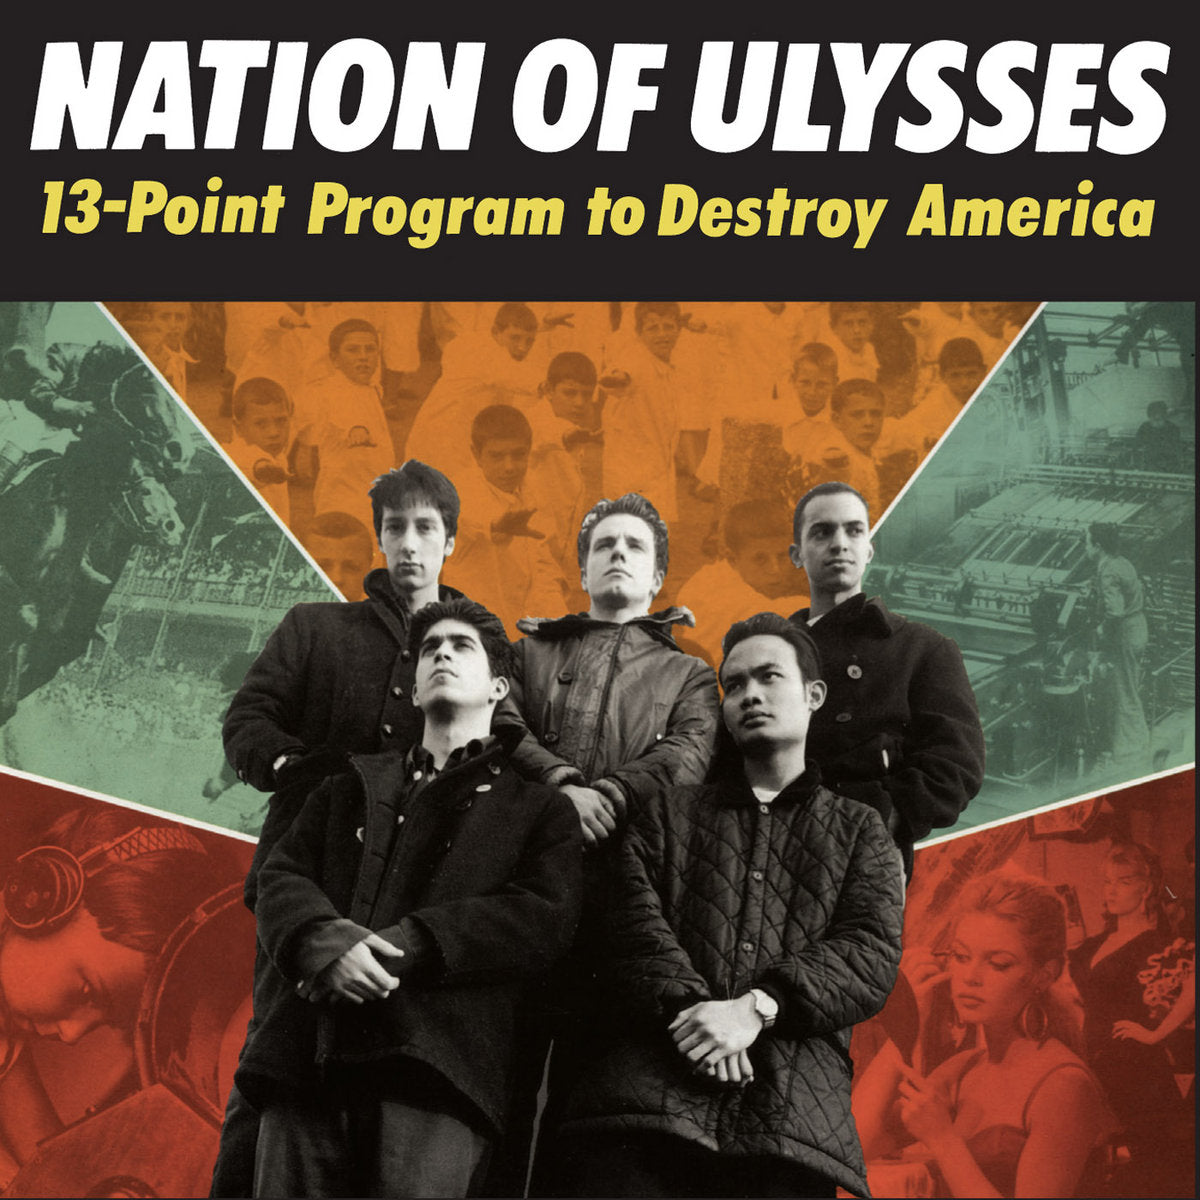 NATION OF ULYSSES "13 POINT PROGRAM TO DESTROY AMERICA"